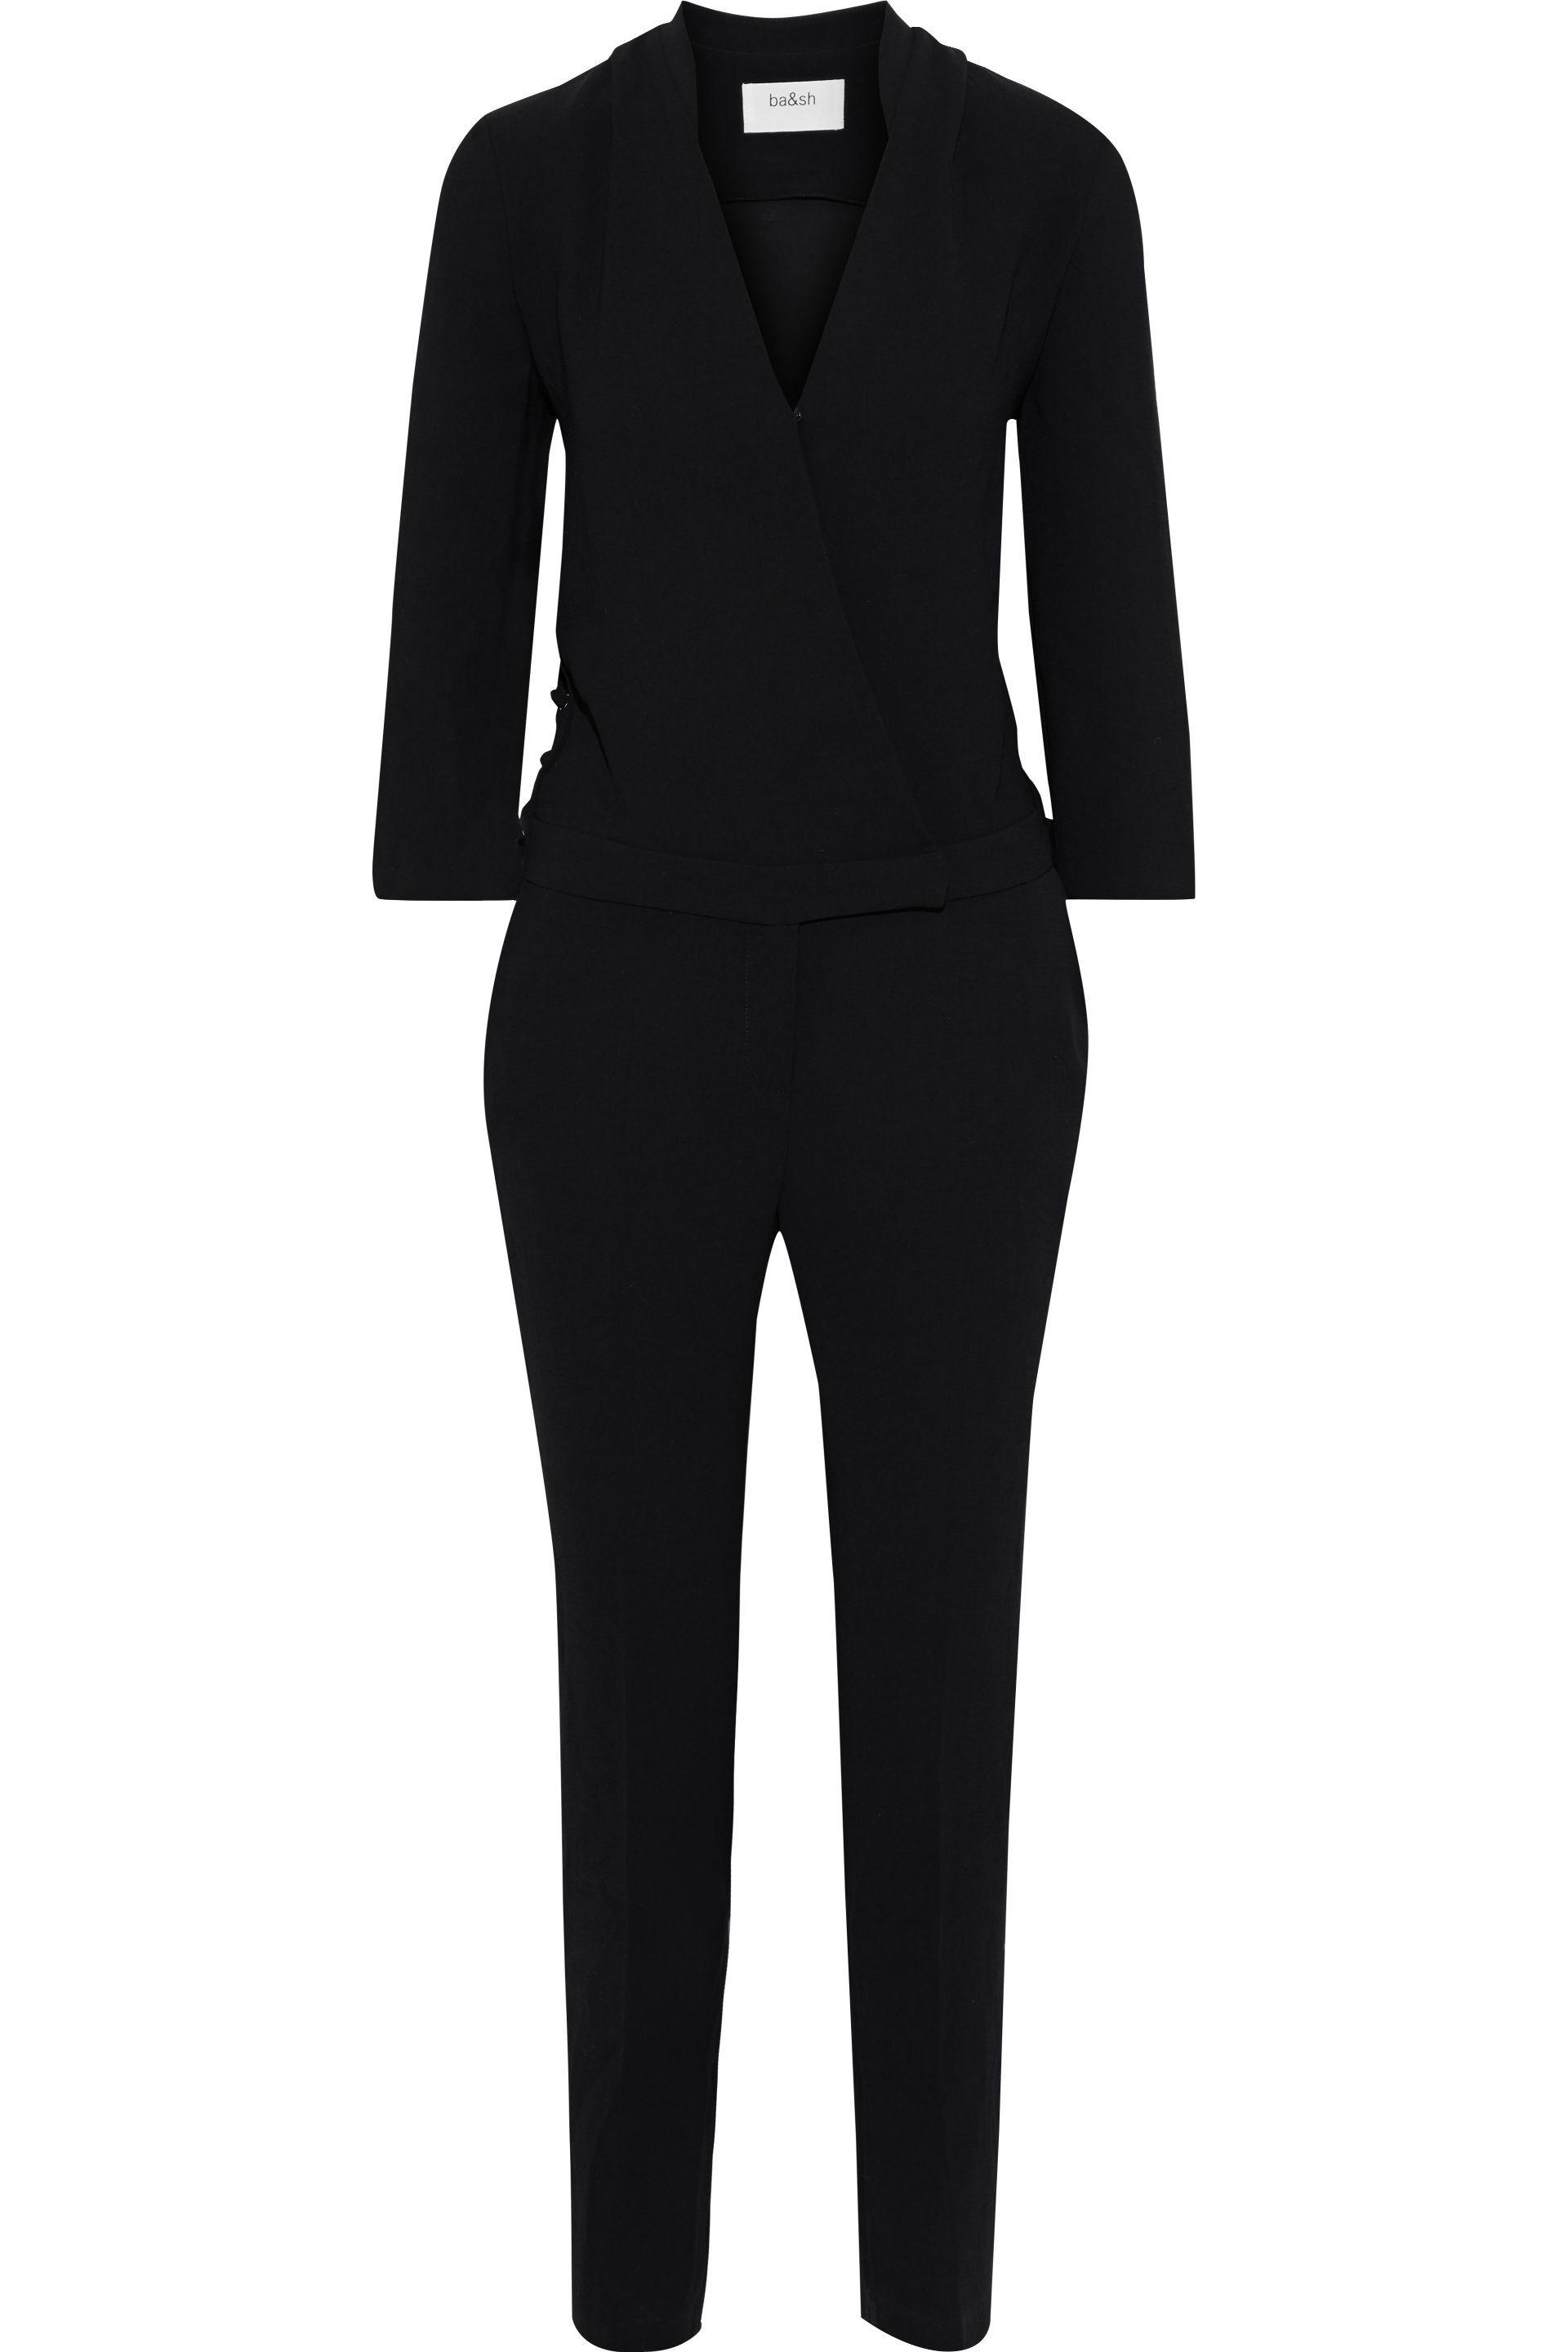 Ba&sh Synthetic Chiara Lace-up Crepe Jumpsuit Black - Lyst